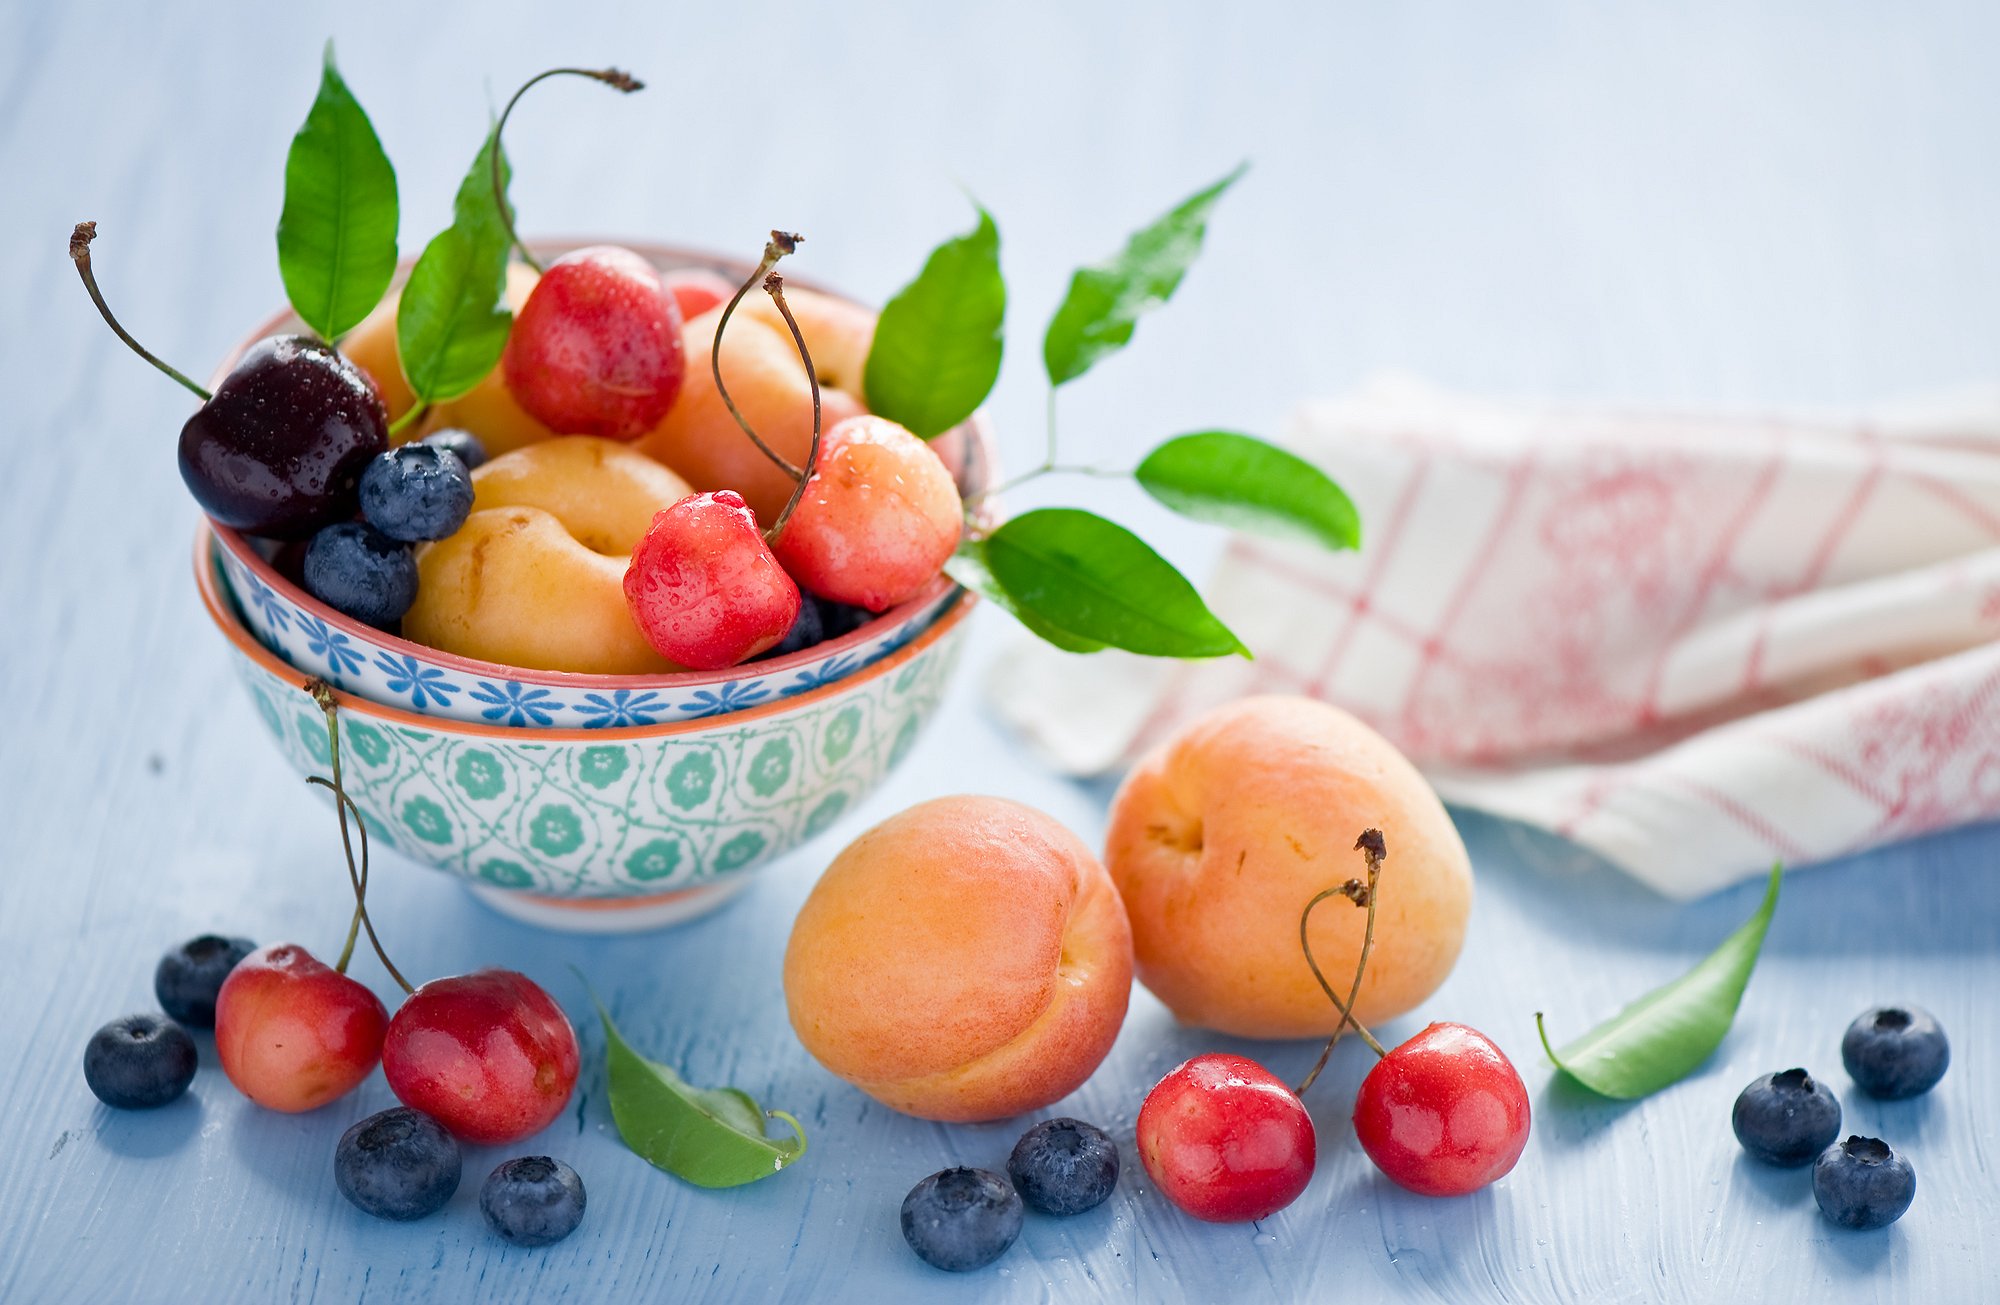 http://www.magic4walls.com/wp-content/uploads/2014/02/food-bowl-fruit-wallpaper-hd-fresh-peach-cherries-blueberries-leaves.jpg